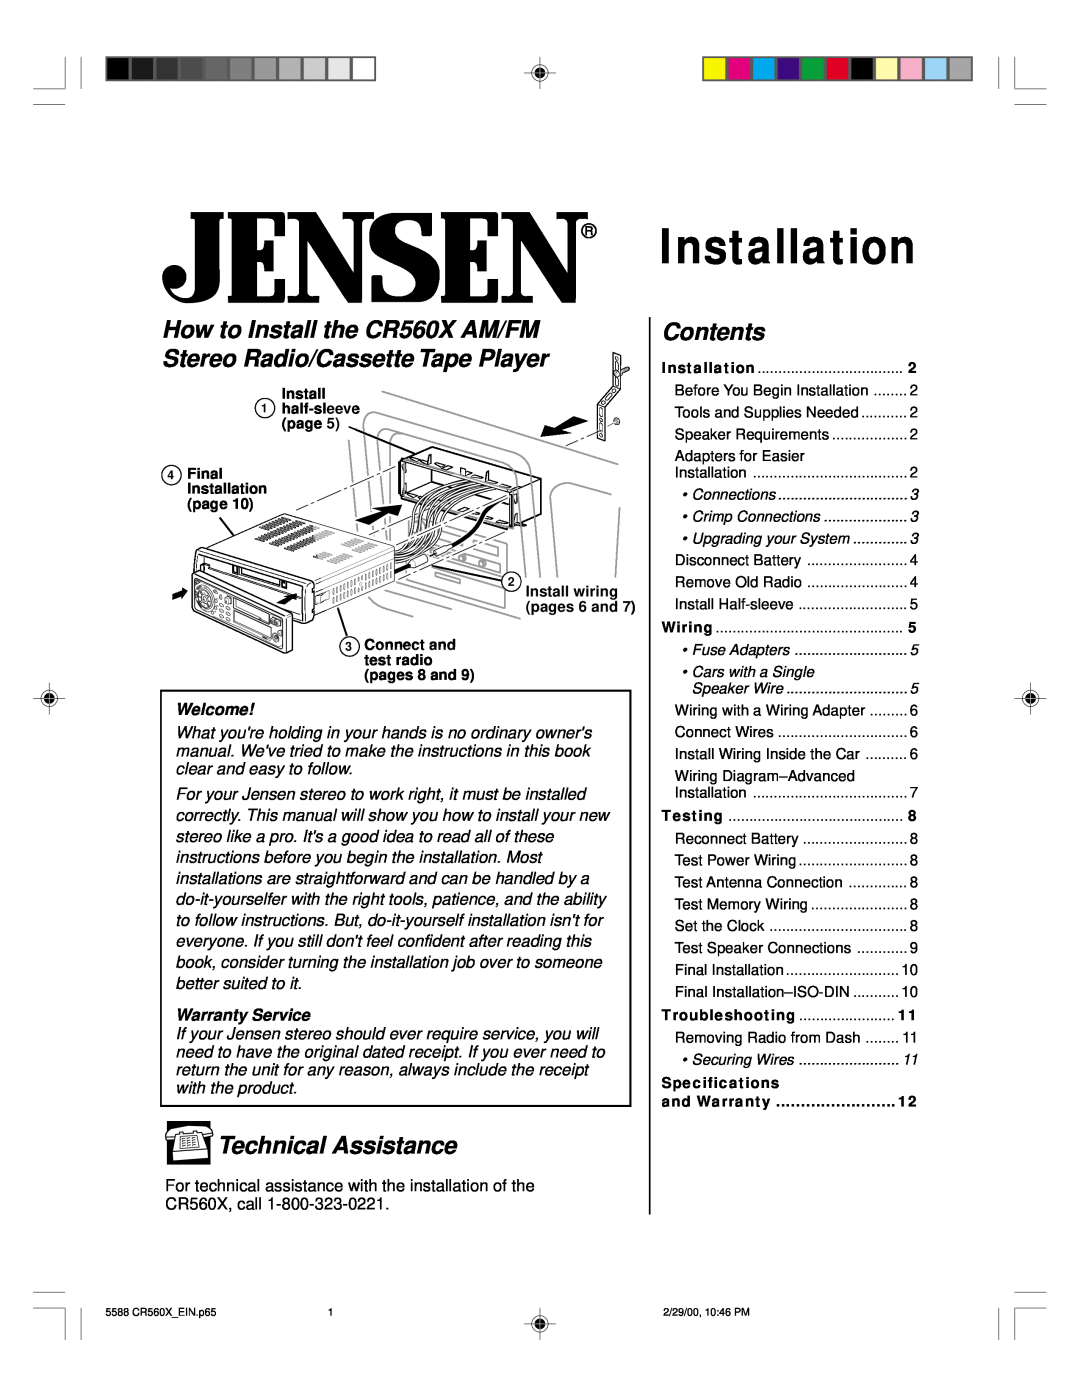 Jensen user manual User guide JENSEN CR560X, Operating instructions JENSEN CR560X, Instructions for use JENSEN CR560X 